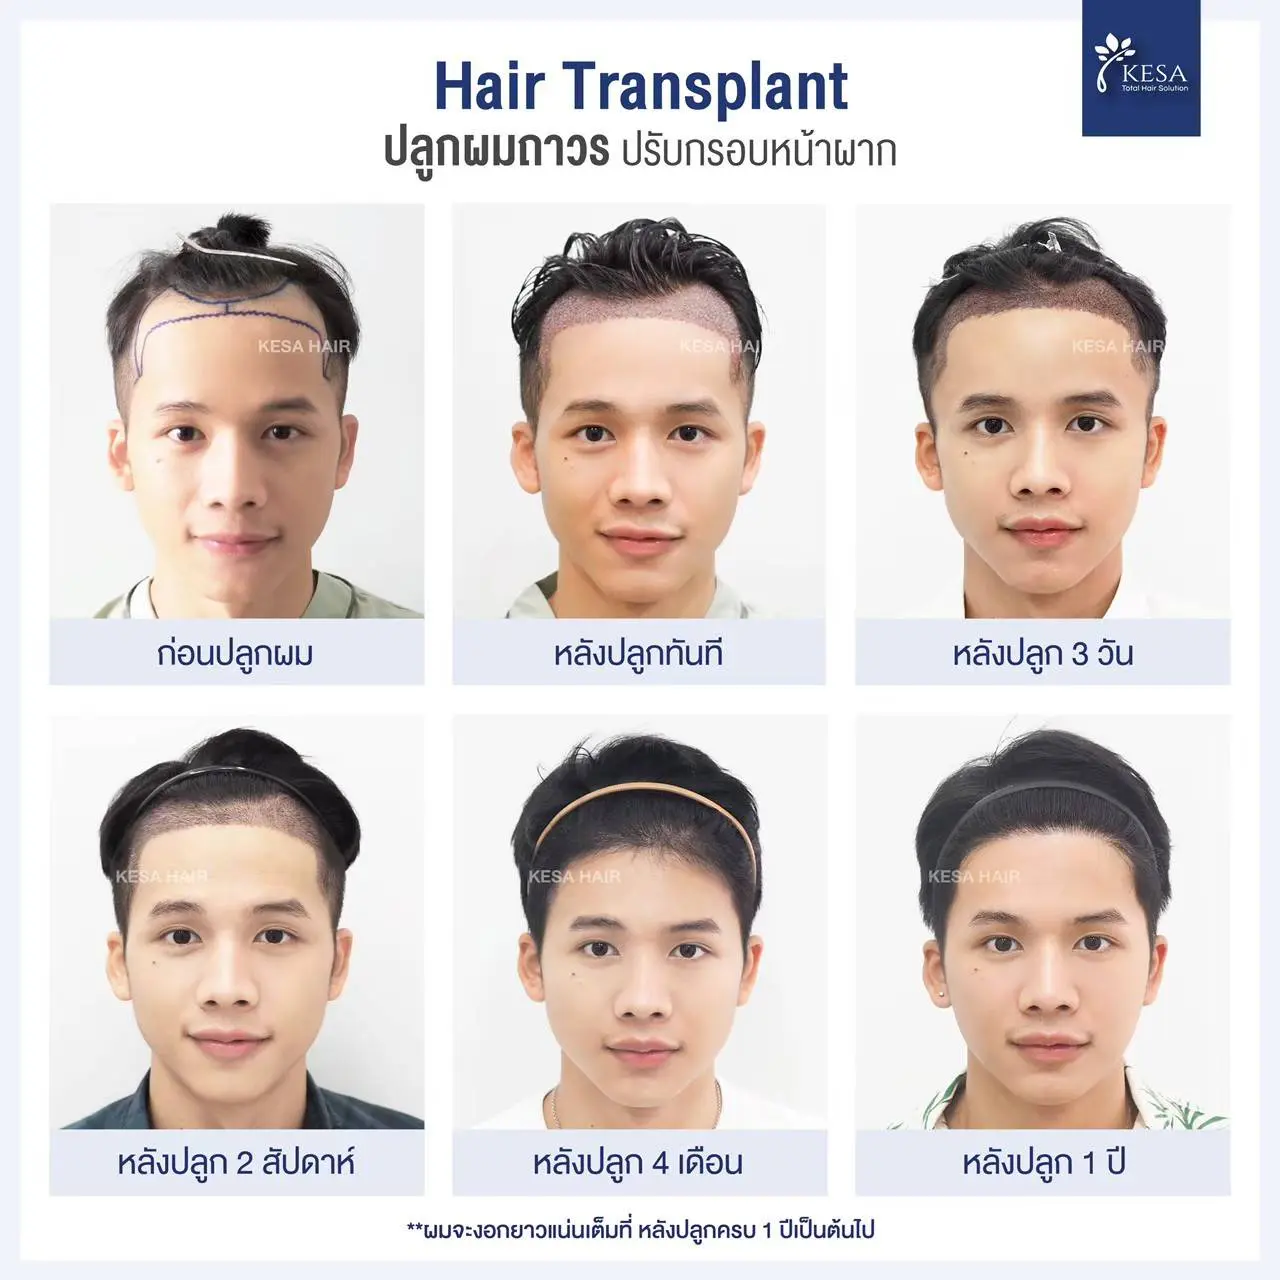 Hair Transplant Timeline